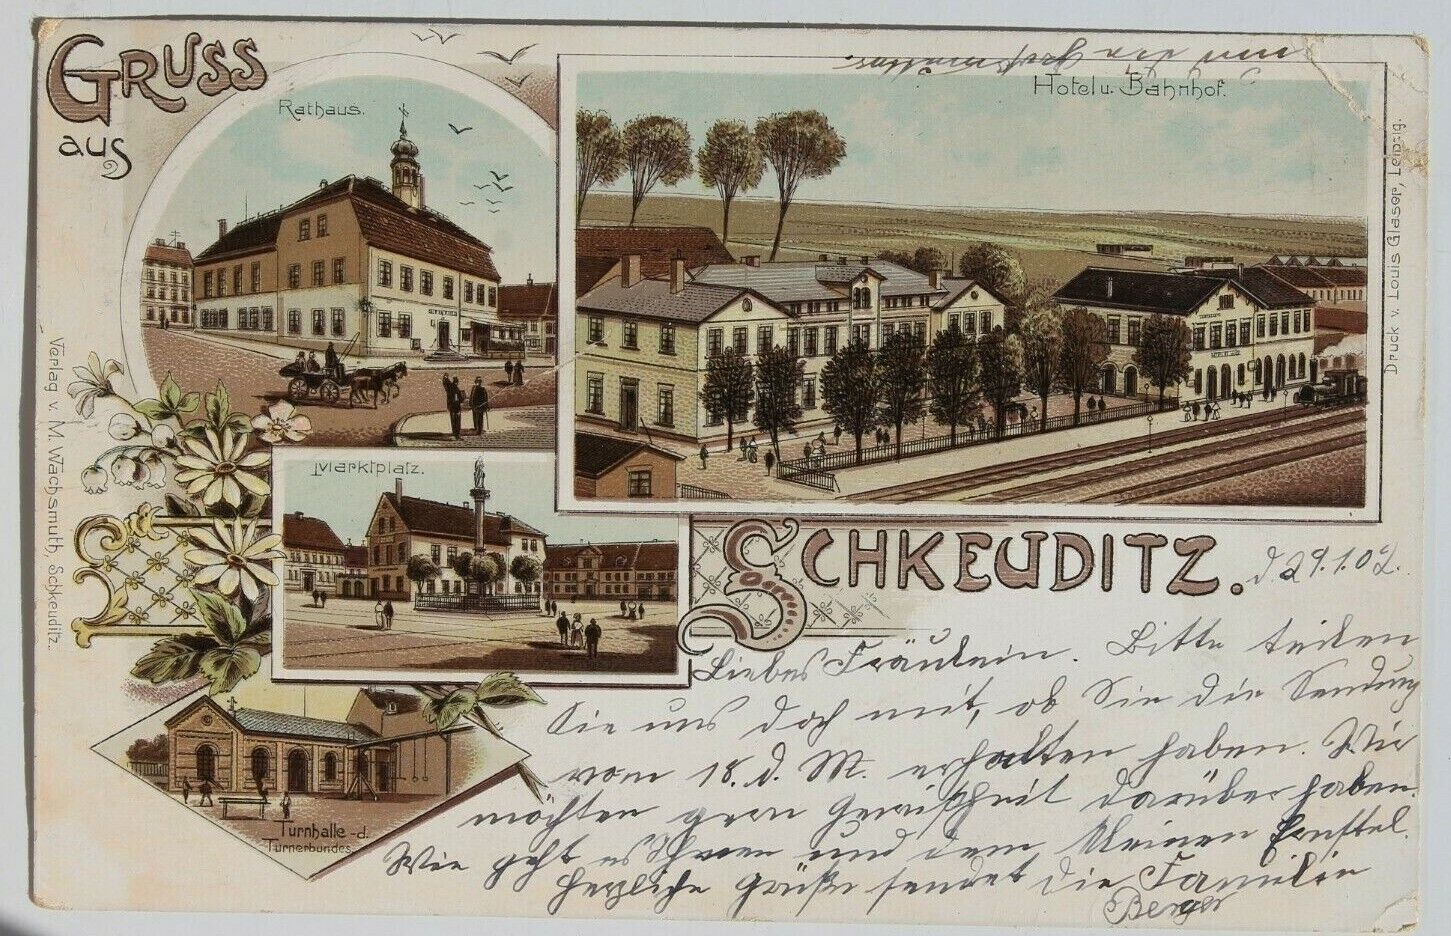 33928 Litho Ak Schkeuditz Railway Station Hotel Market Gym Town Hall 1902 At